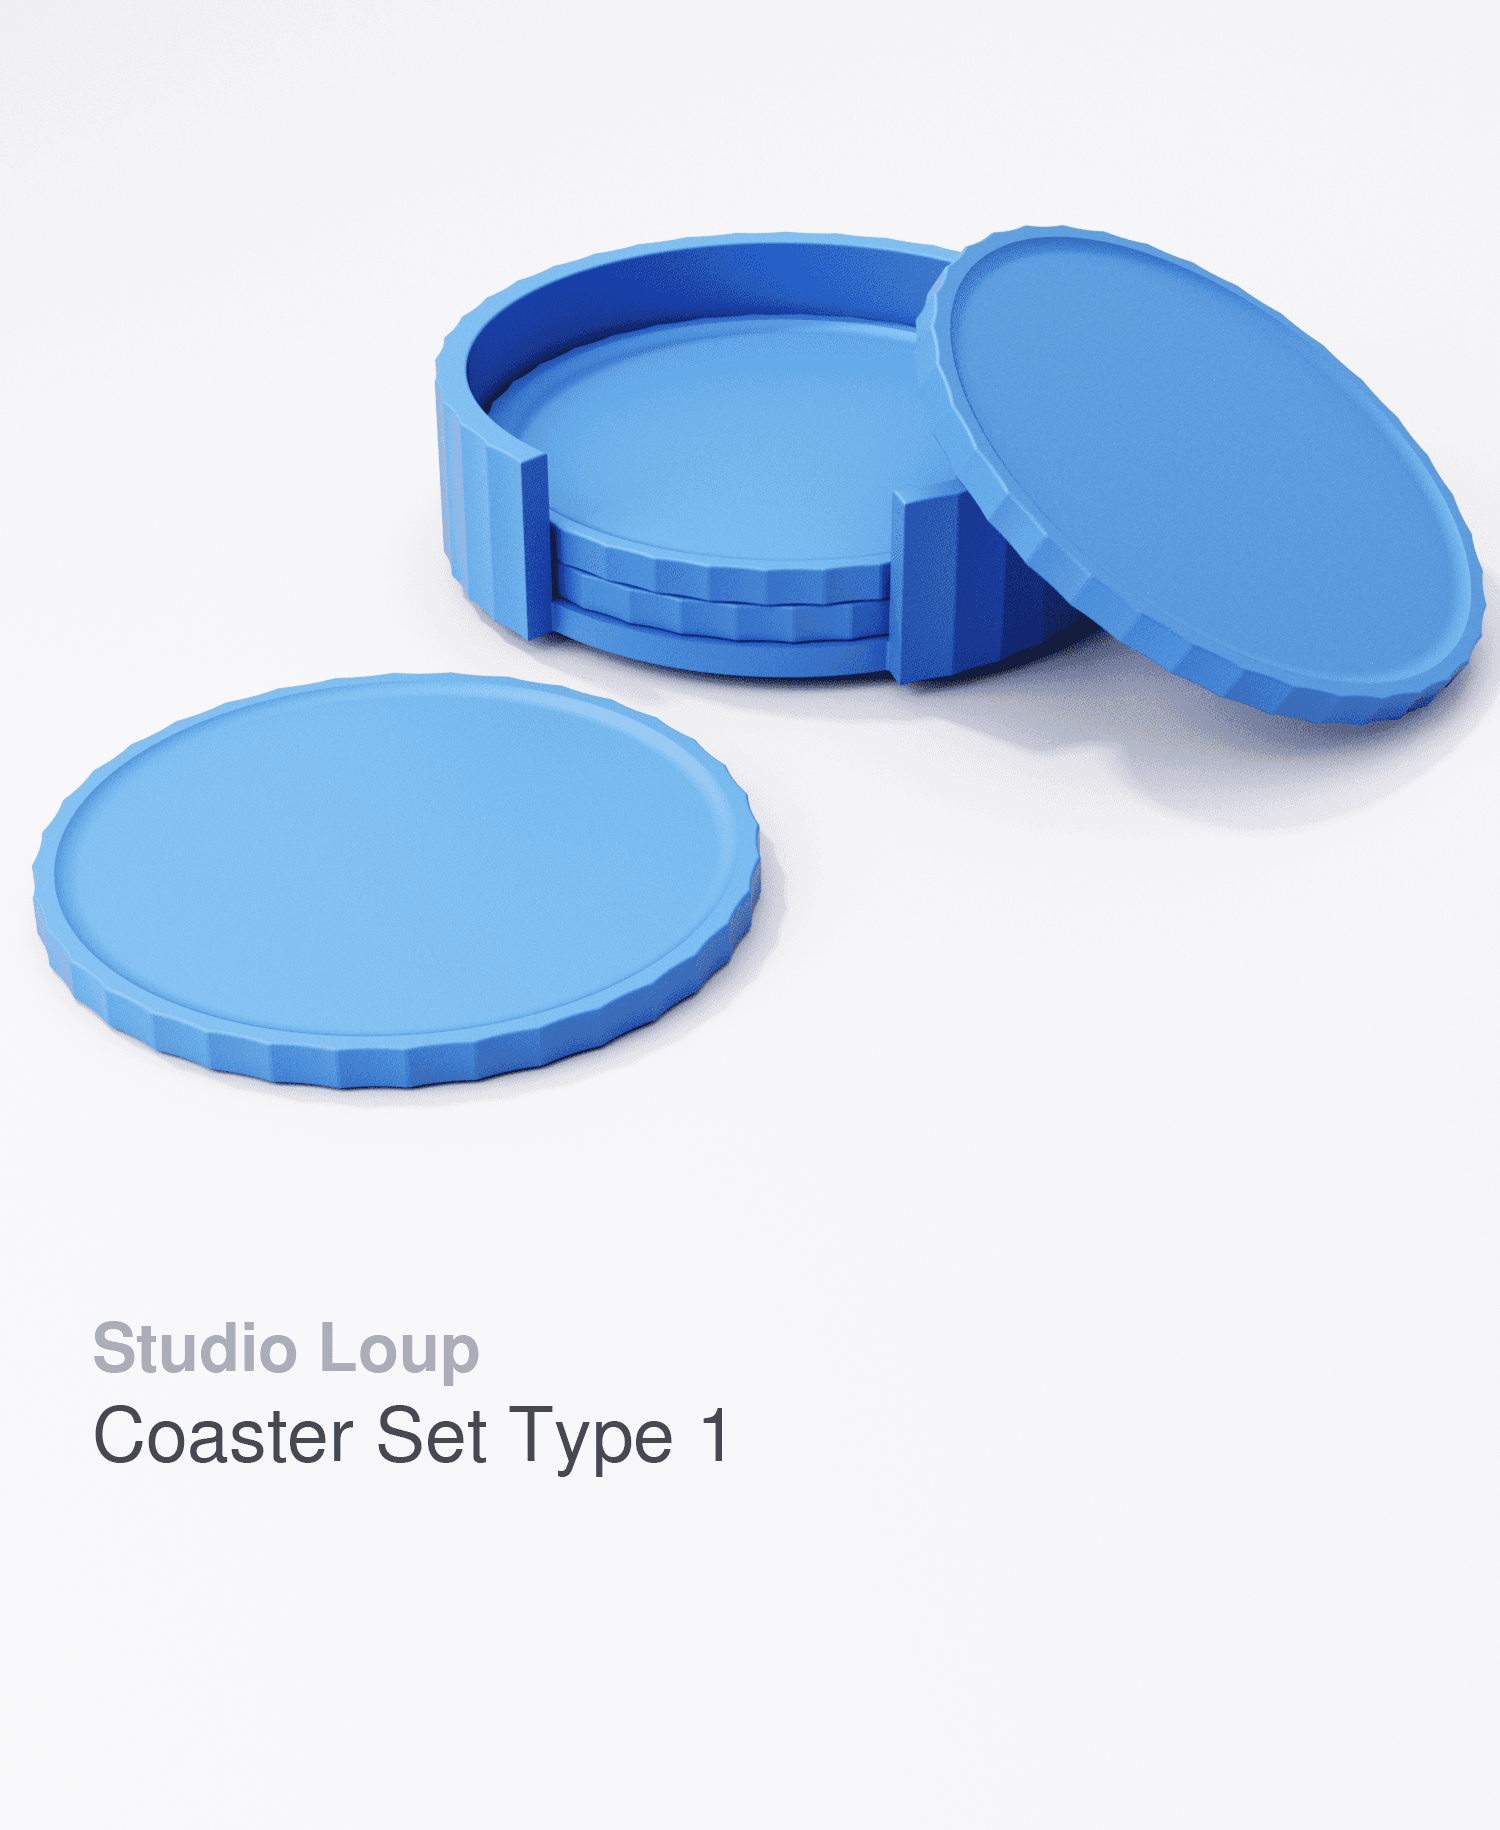 Coaster Set Type 1 3d model